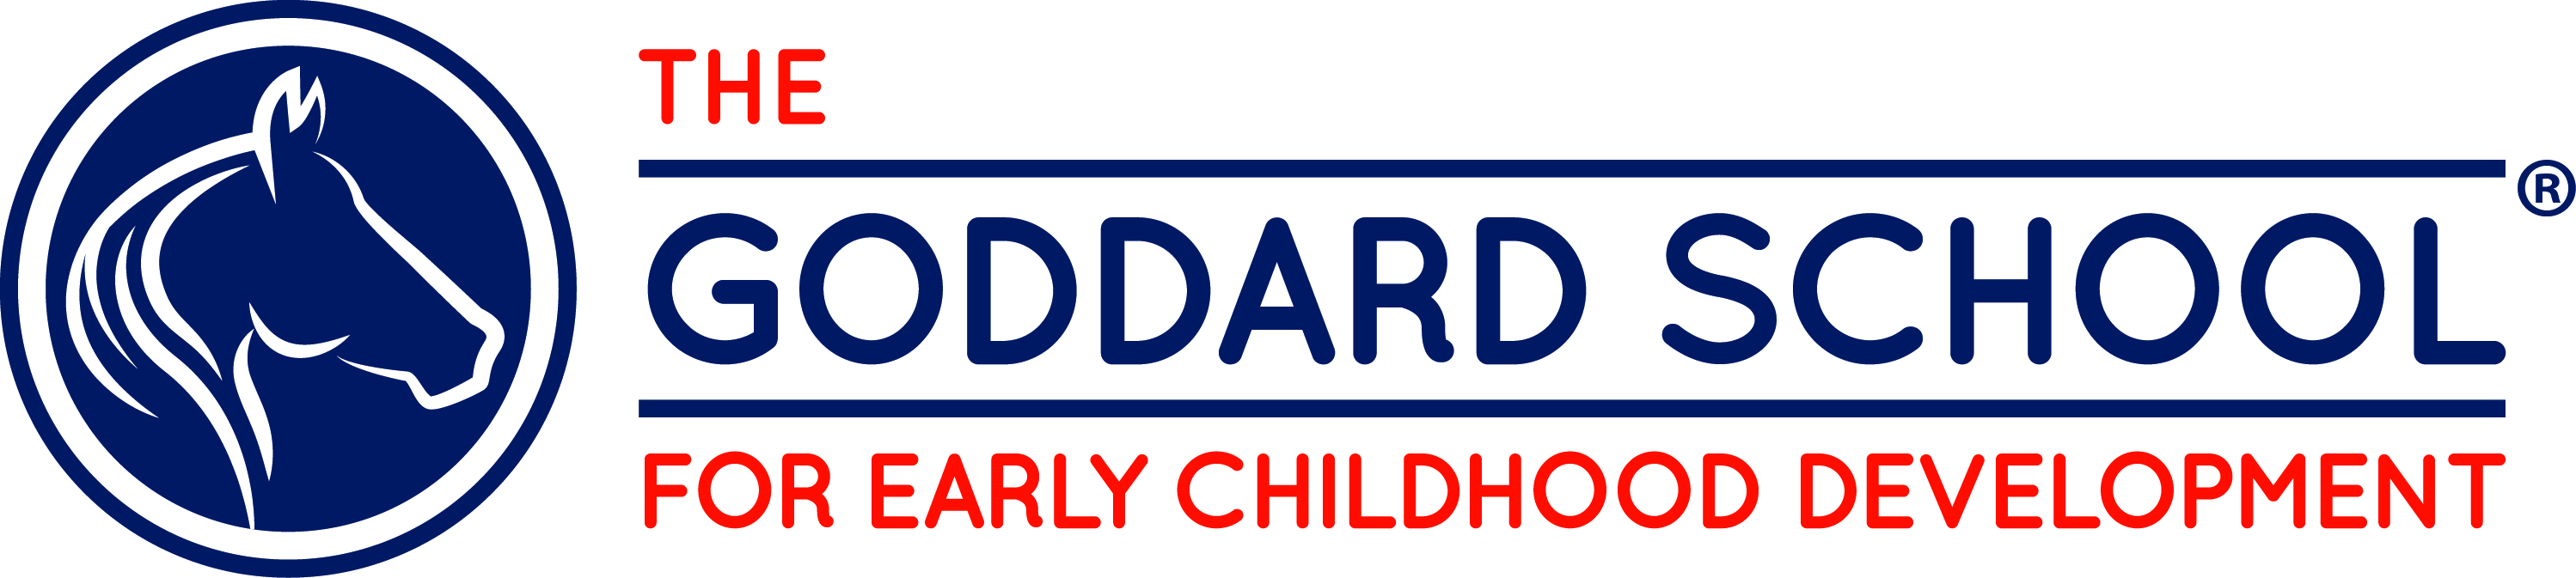 The Goddard School of Elmwood Park